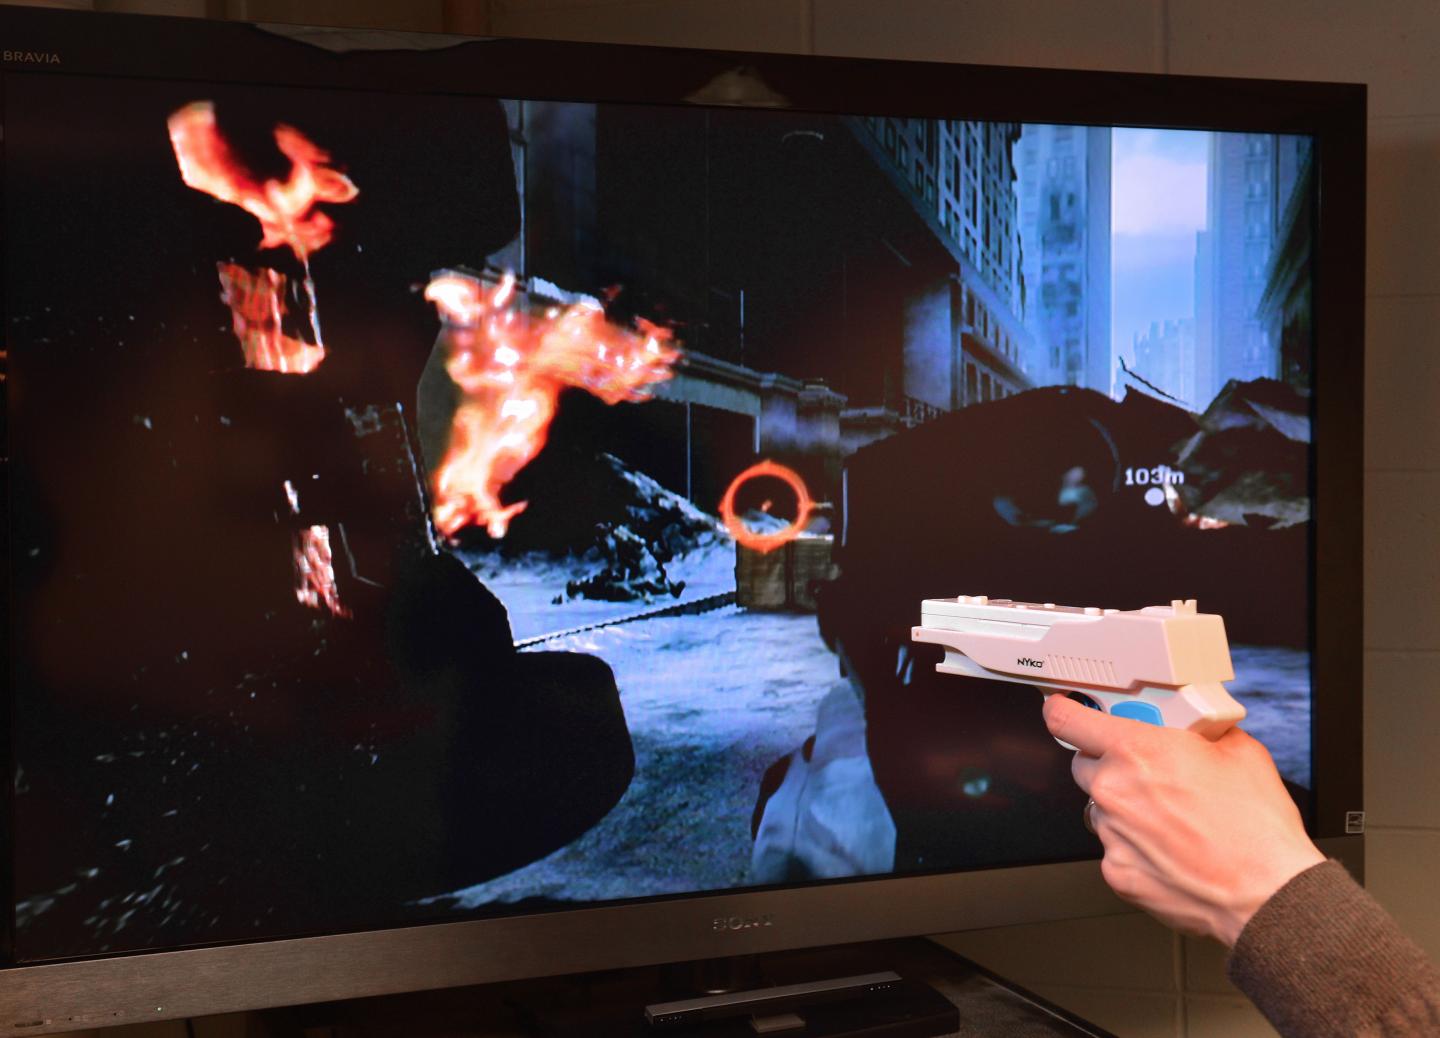 Image of Violent Video Game